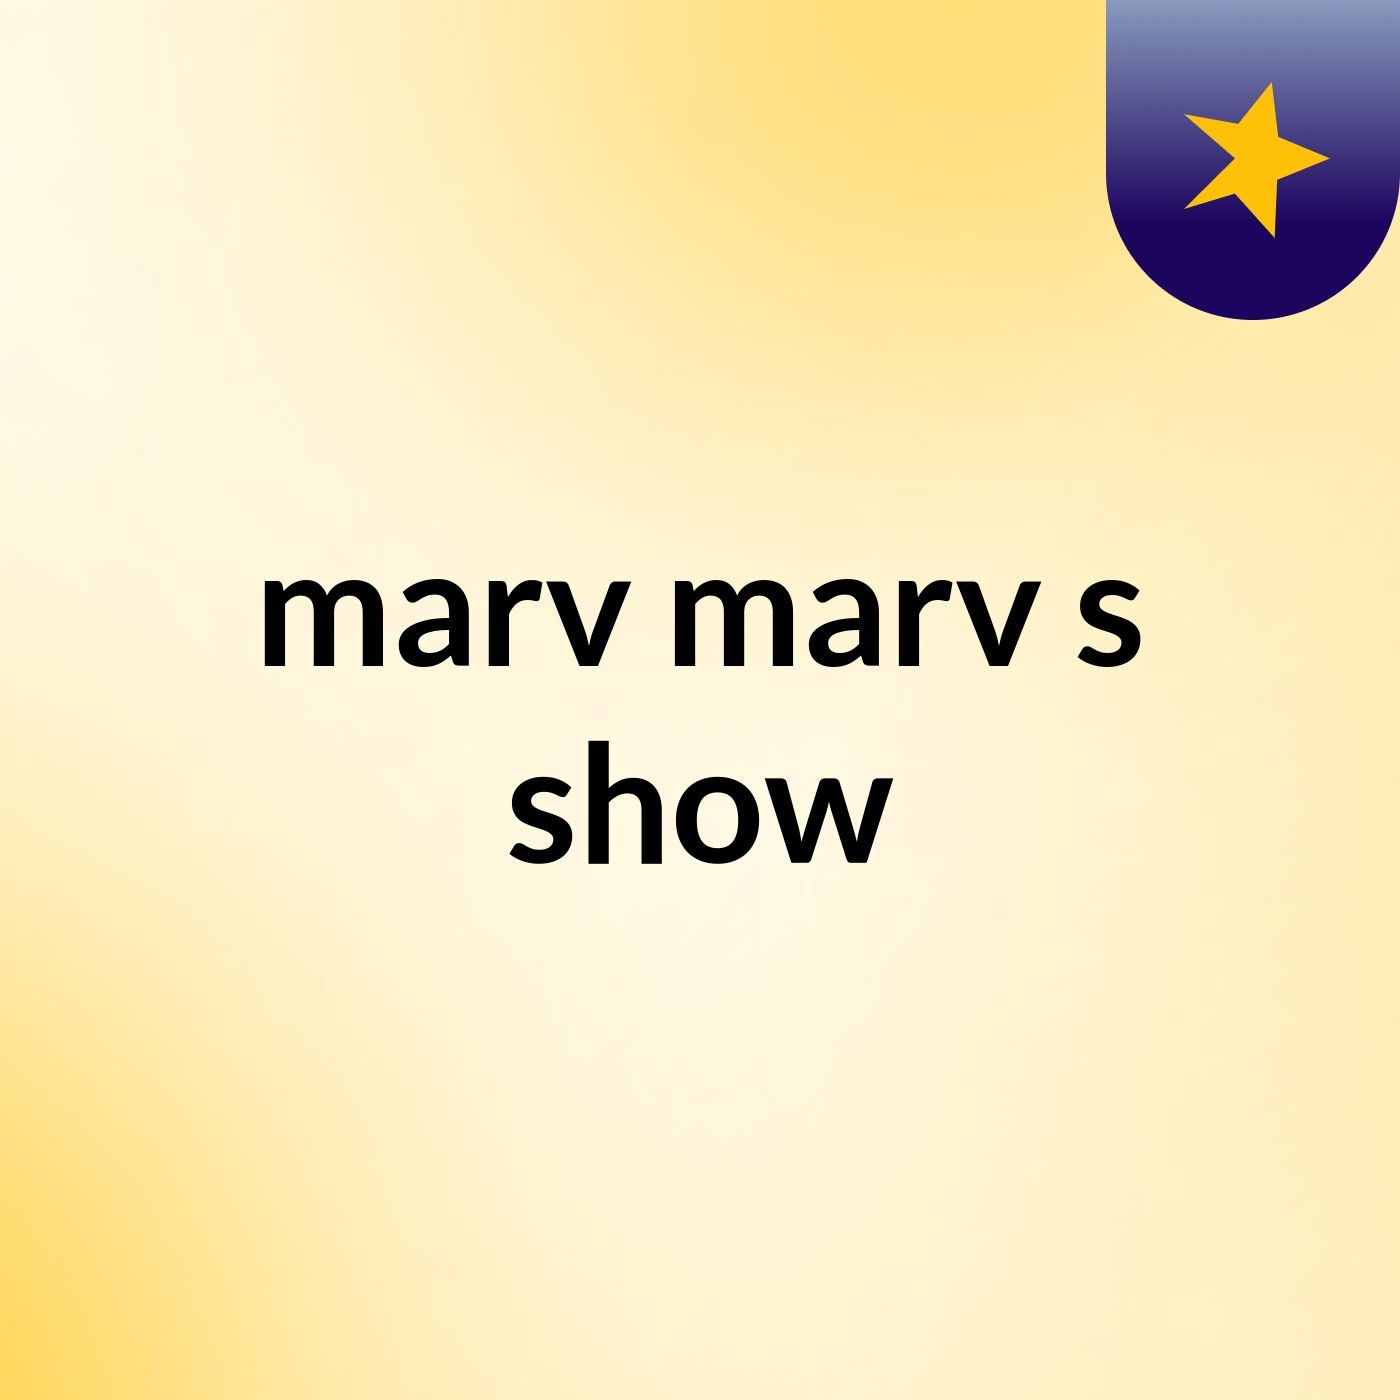 marv marv's show